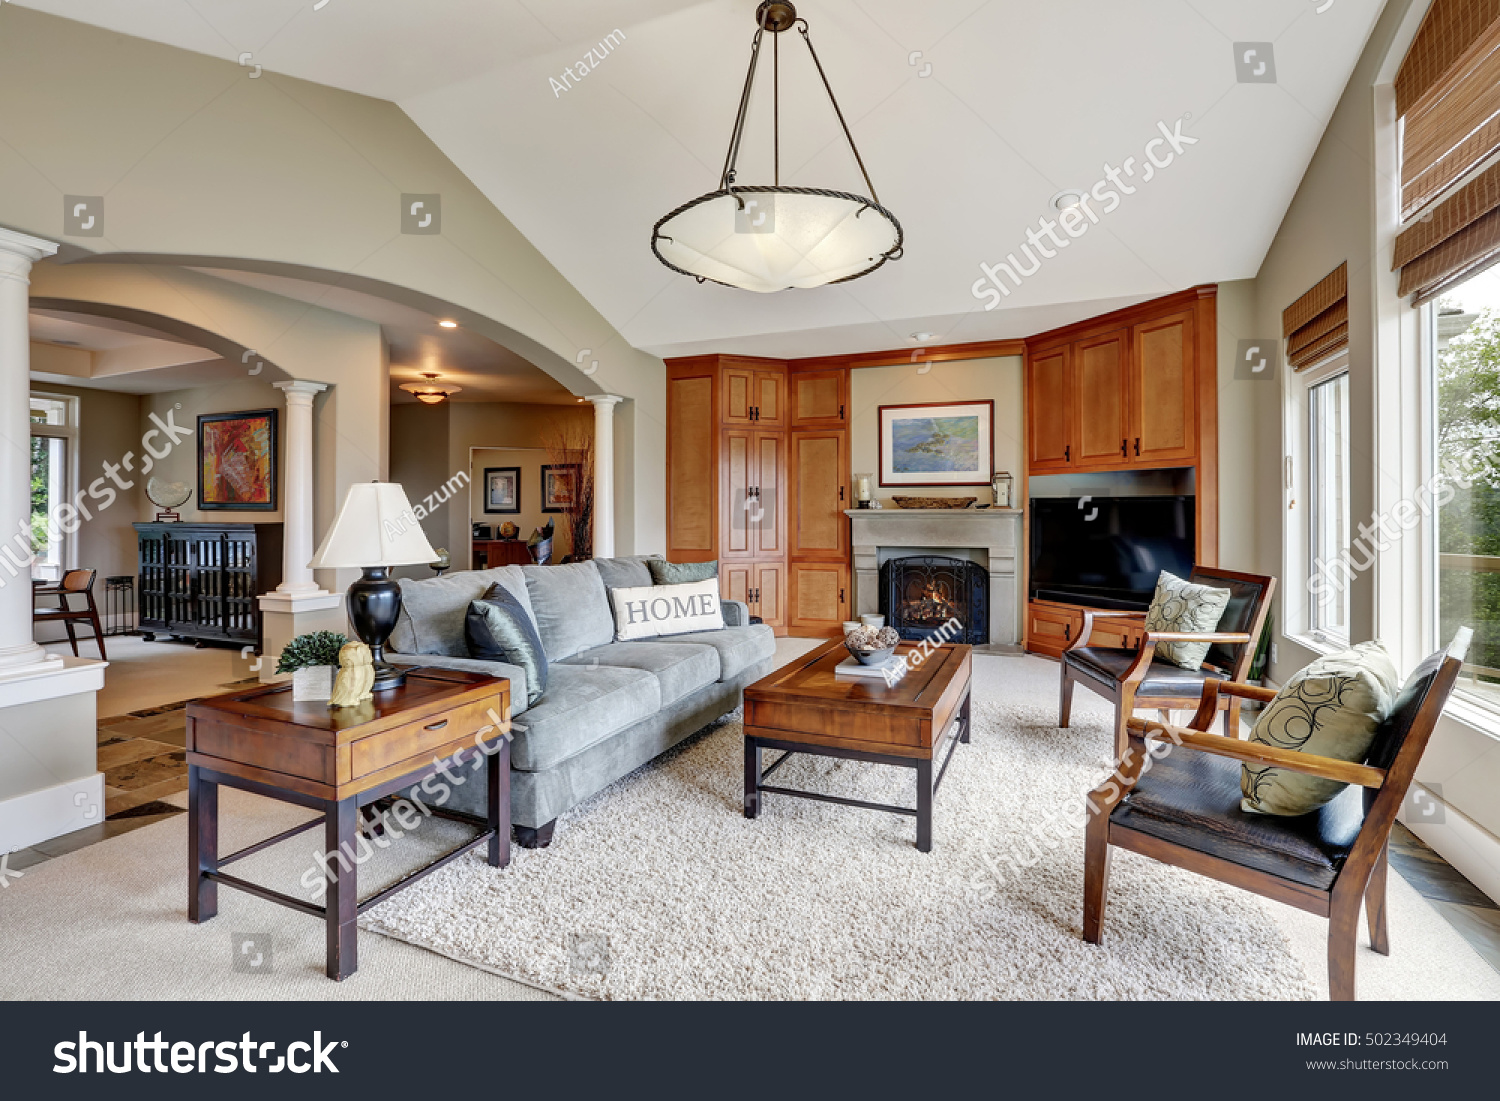 Classic Living Room Interior Large Windows Stock Photo 502349404